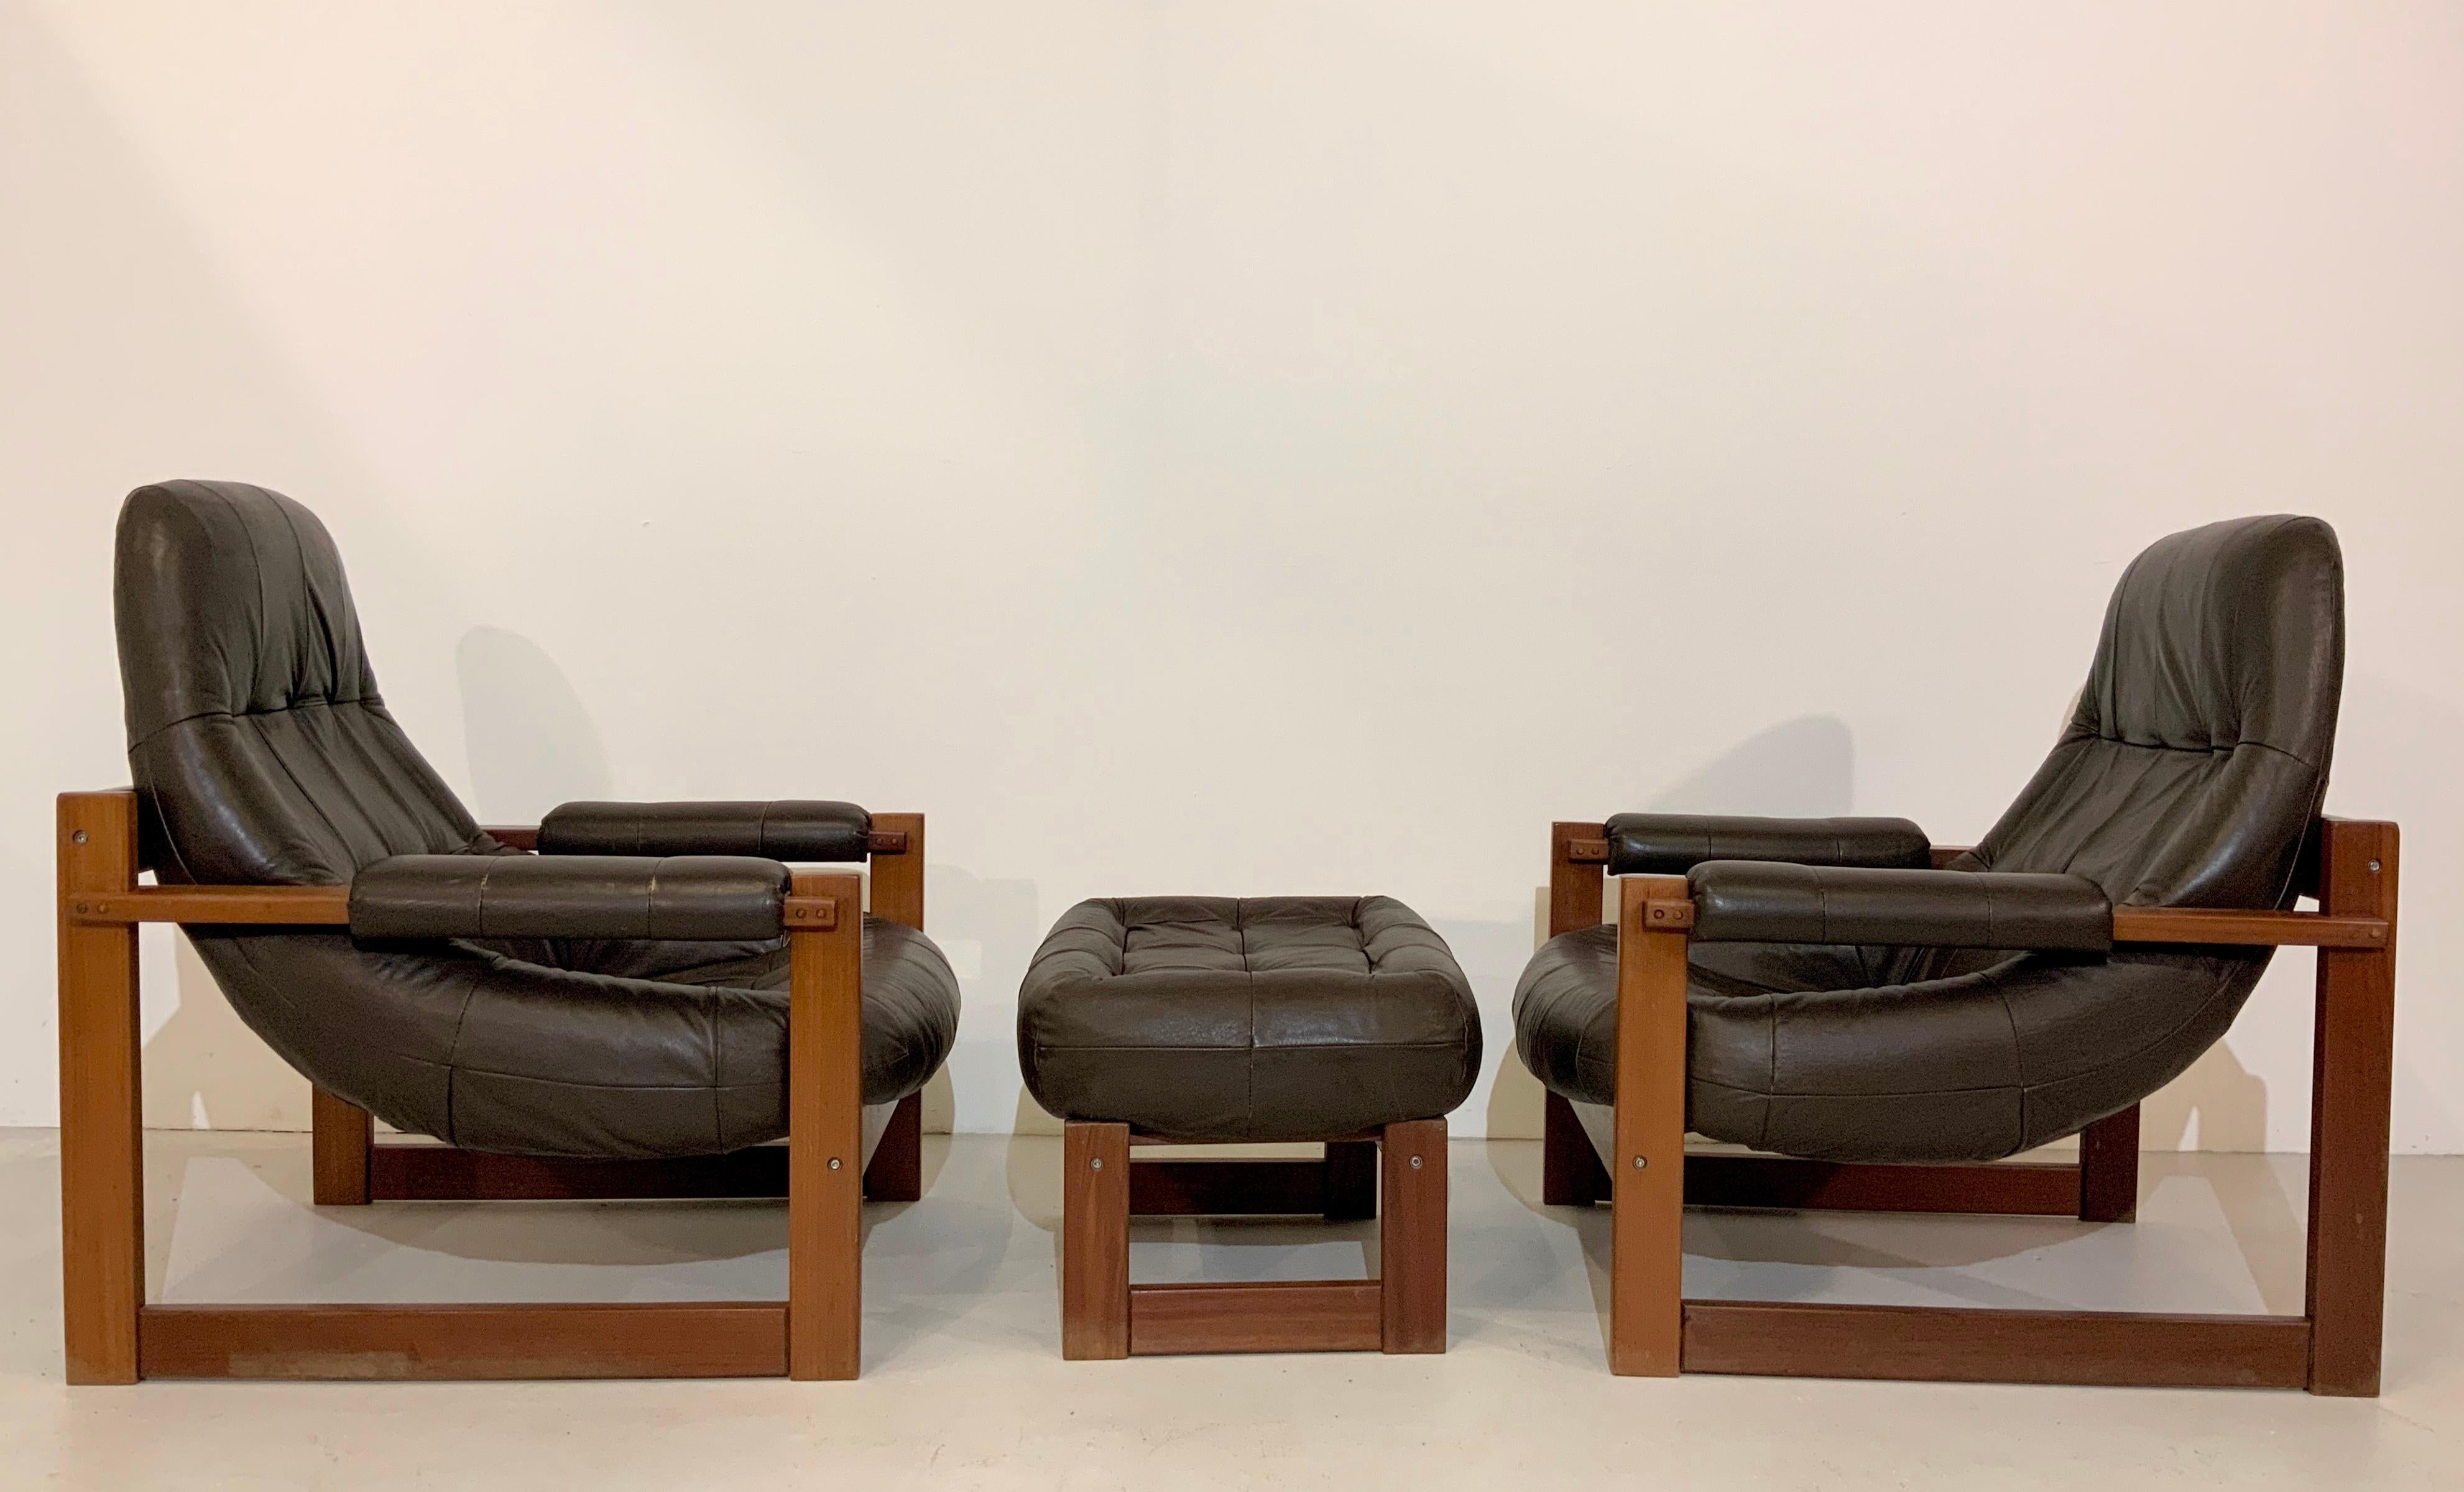 Percival Lafer Brazilian Mid-Century Modern Design Leather Living Room Set 1970s For Sale 2